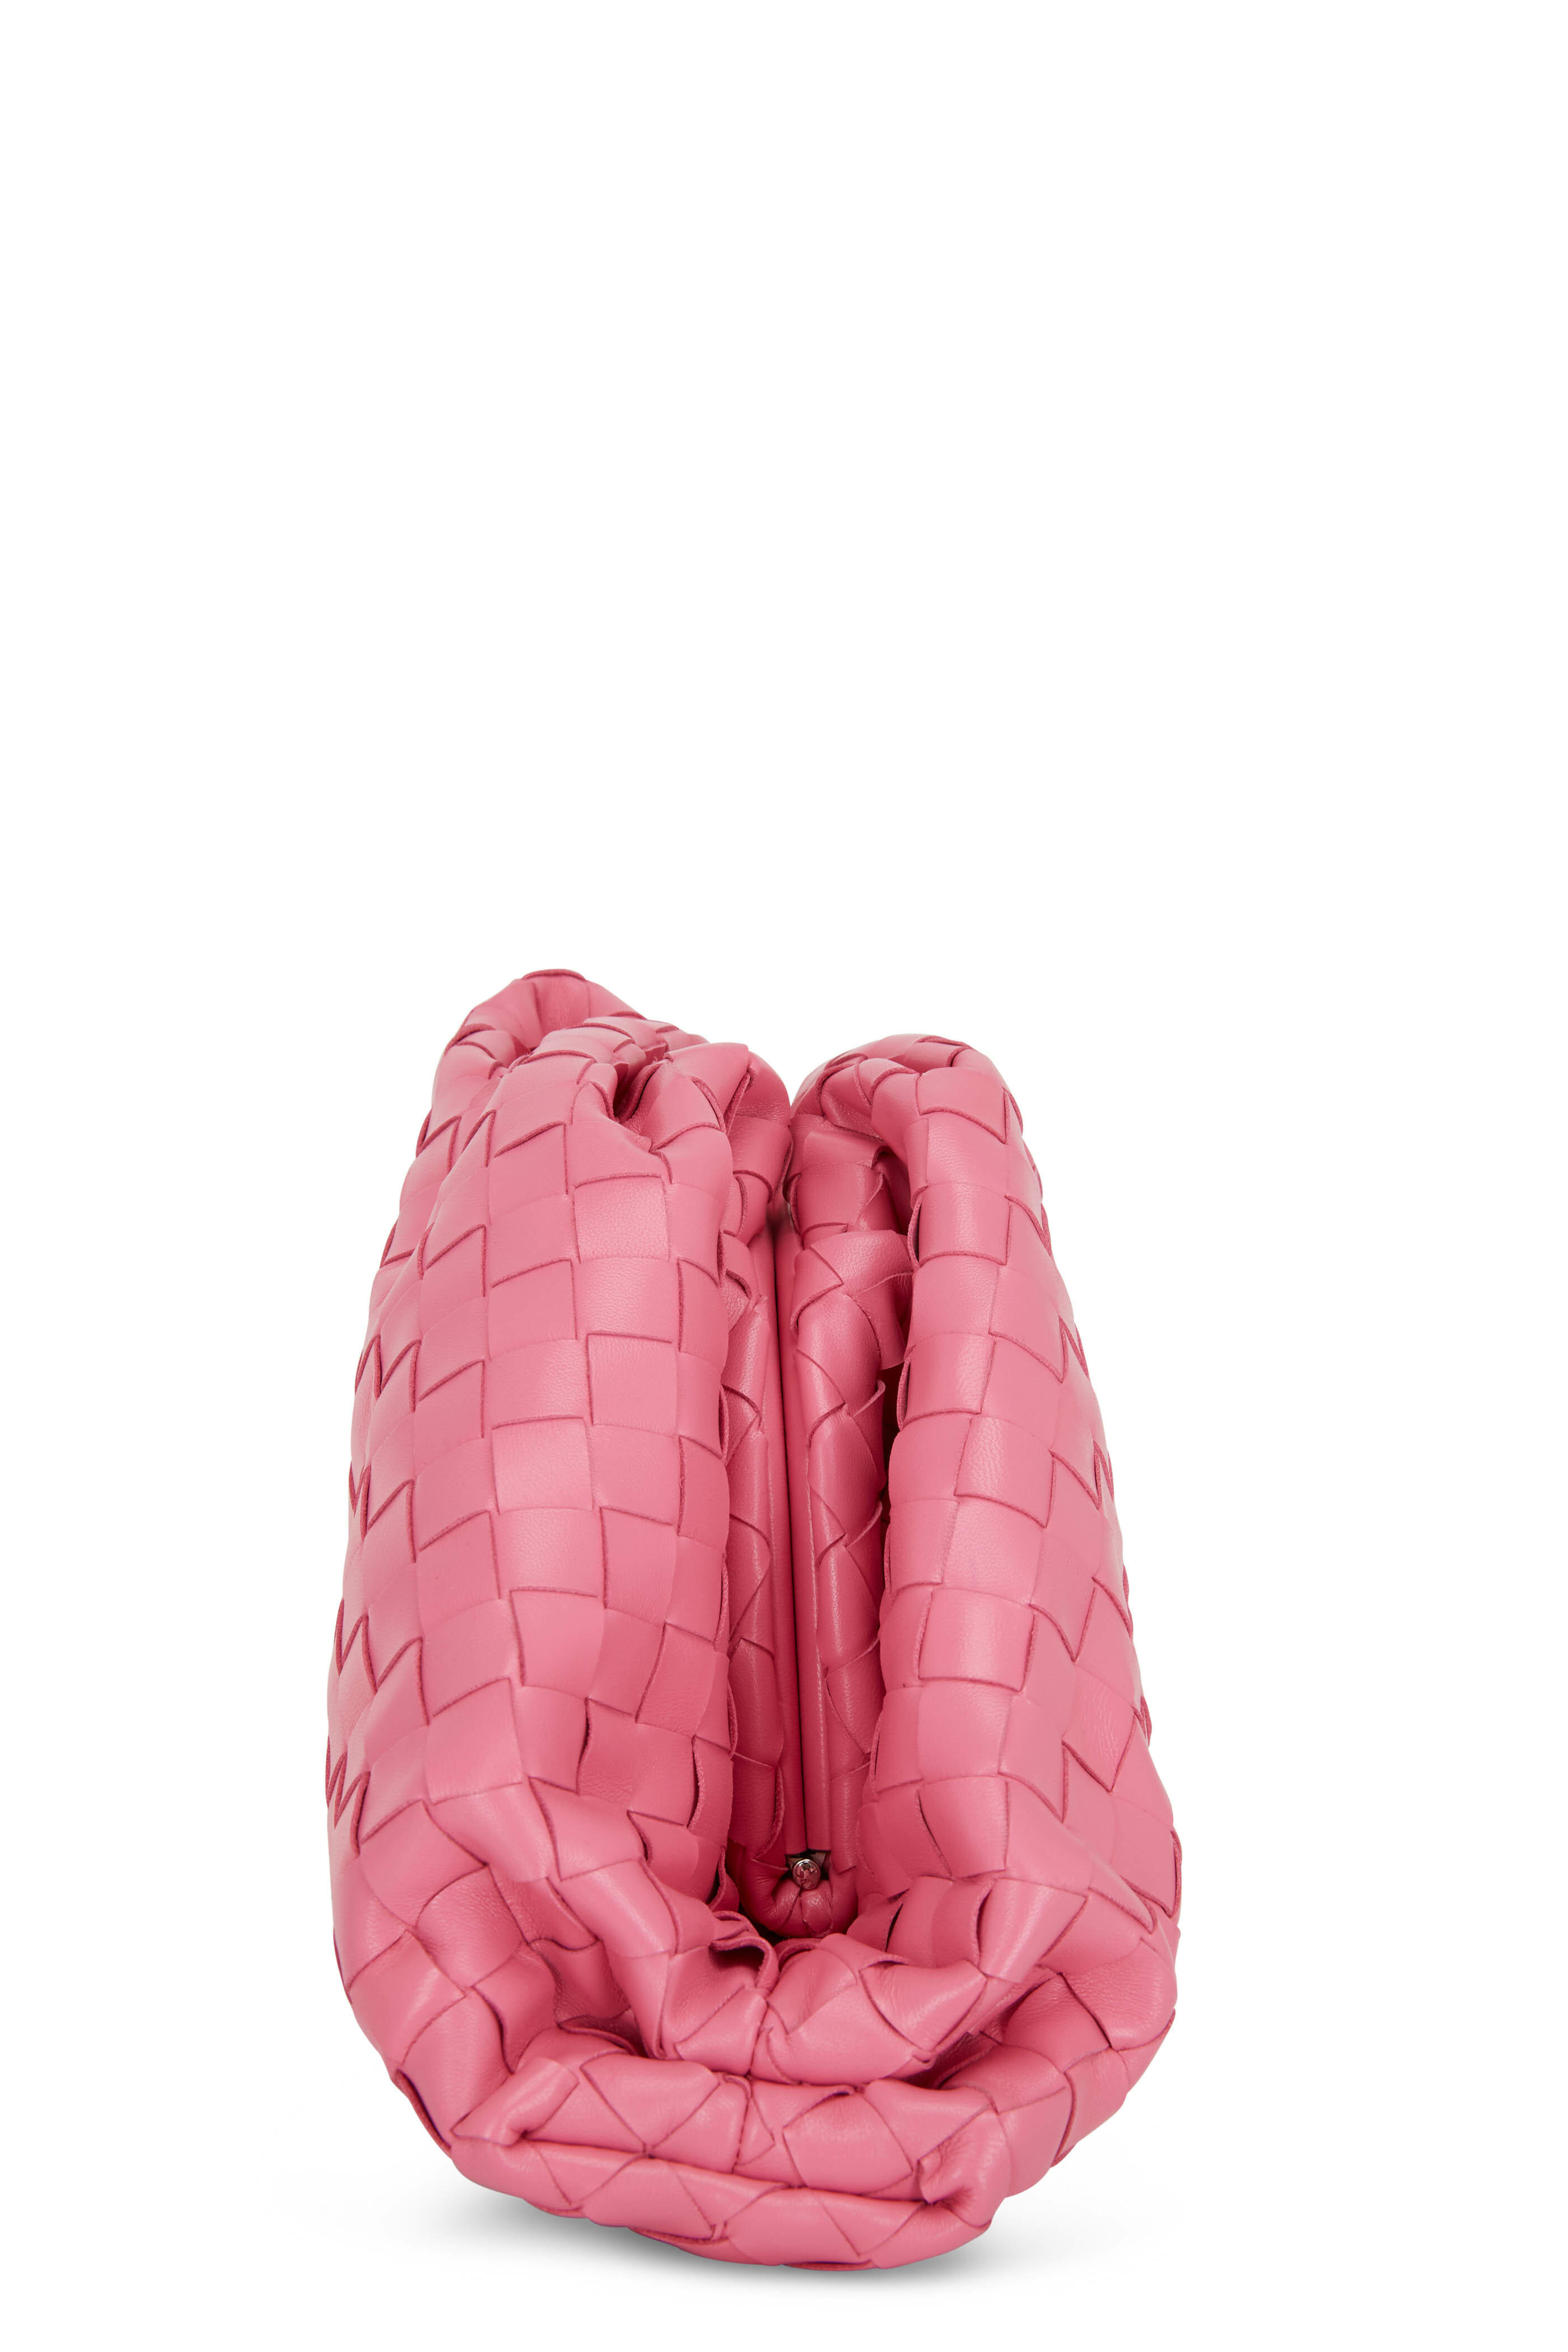 Bottega Veneta - The Pouch Pink Woven Leather Large Bag